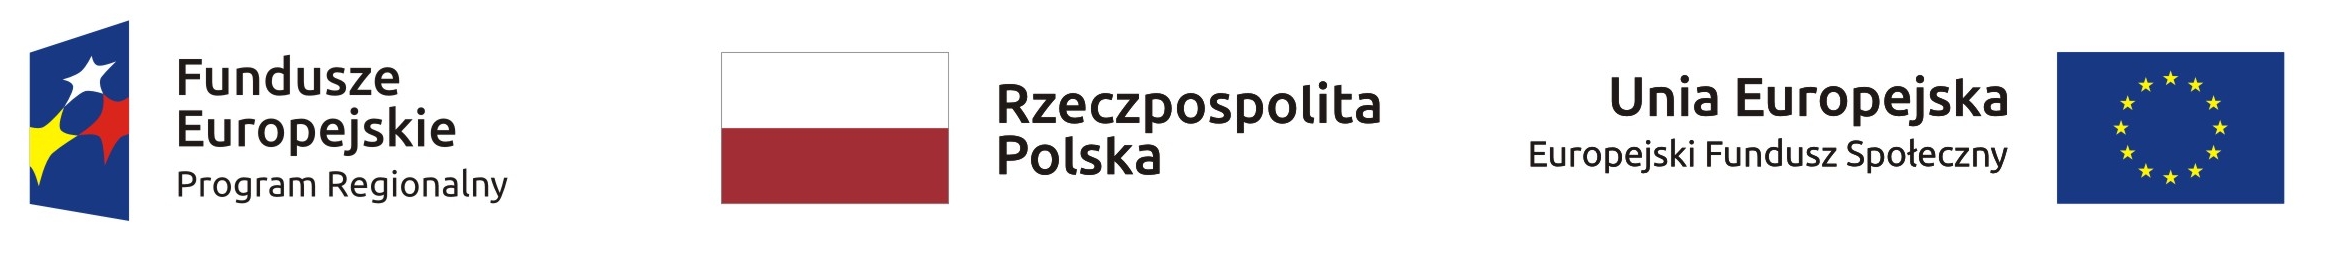 belka logotypy RPO